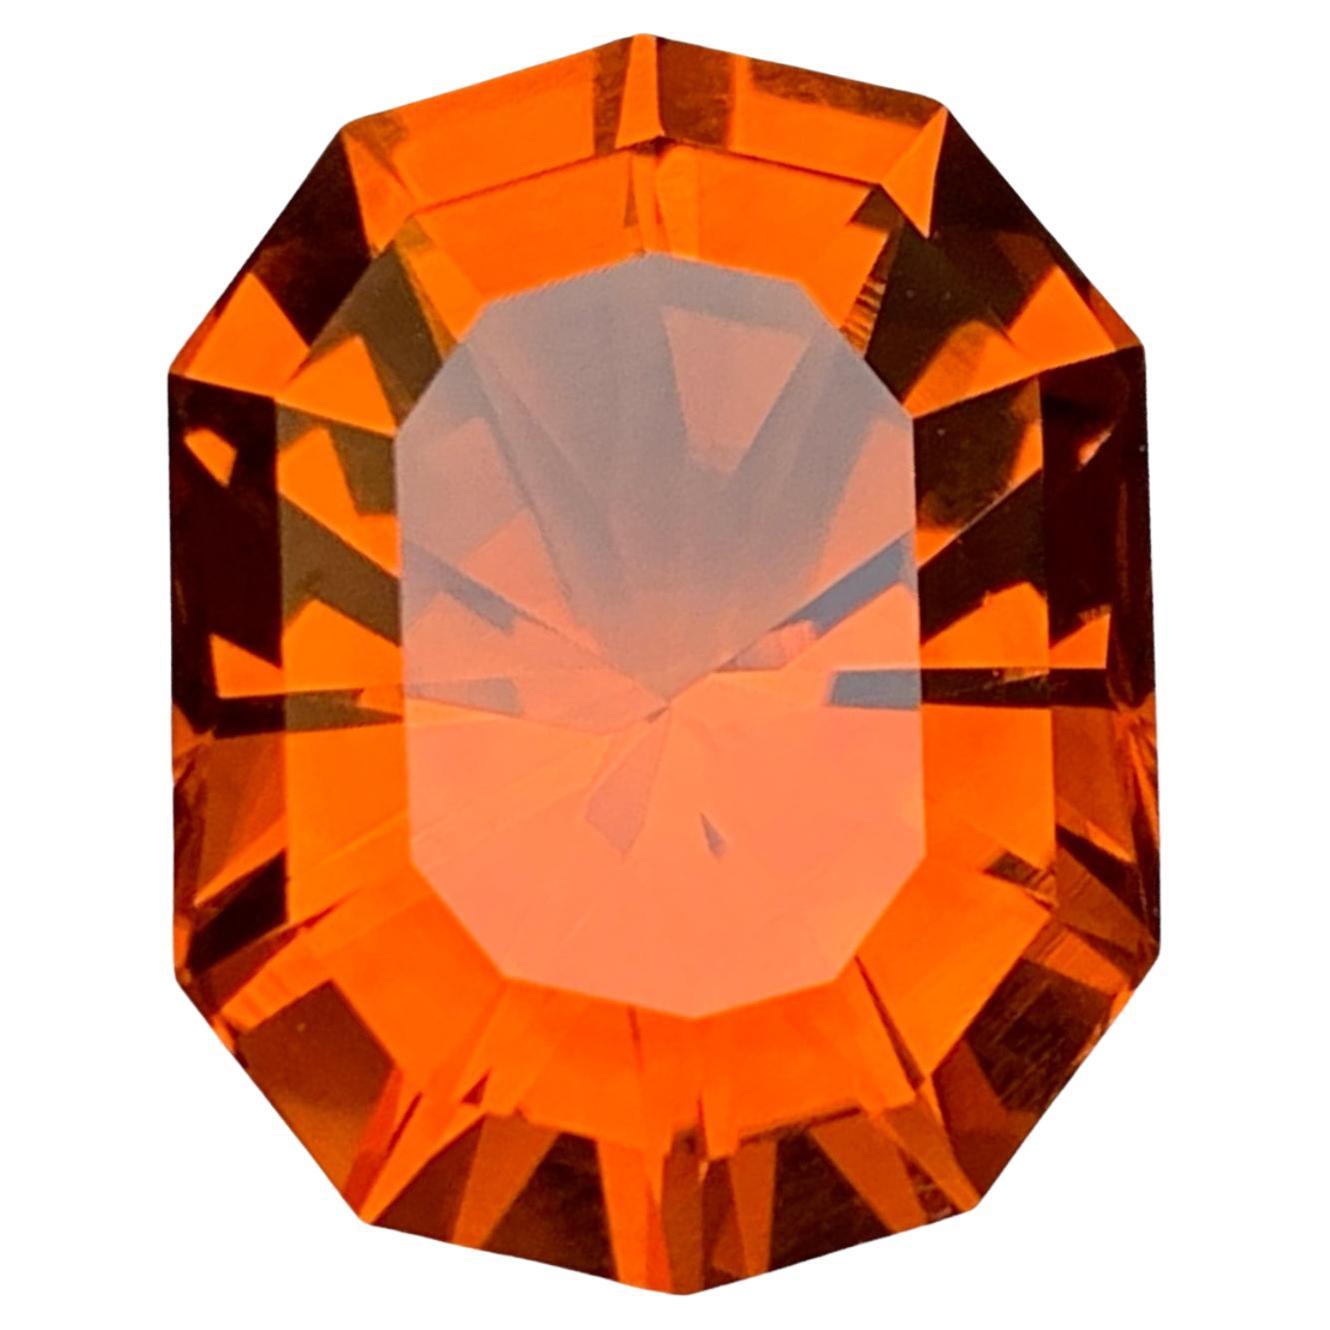 Rare Orange Certified Citrine Loose Gemstone 15.30 Ct Fancy Cut for Pendant